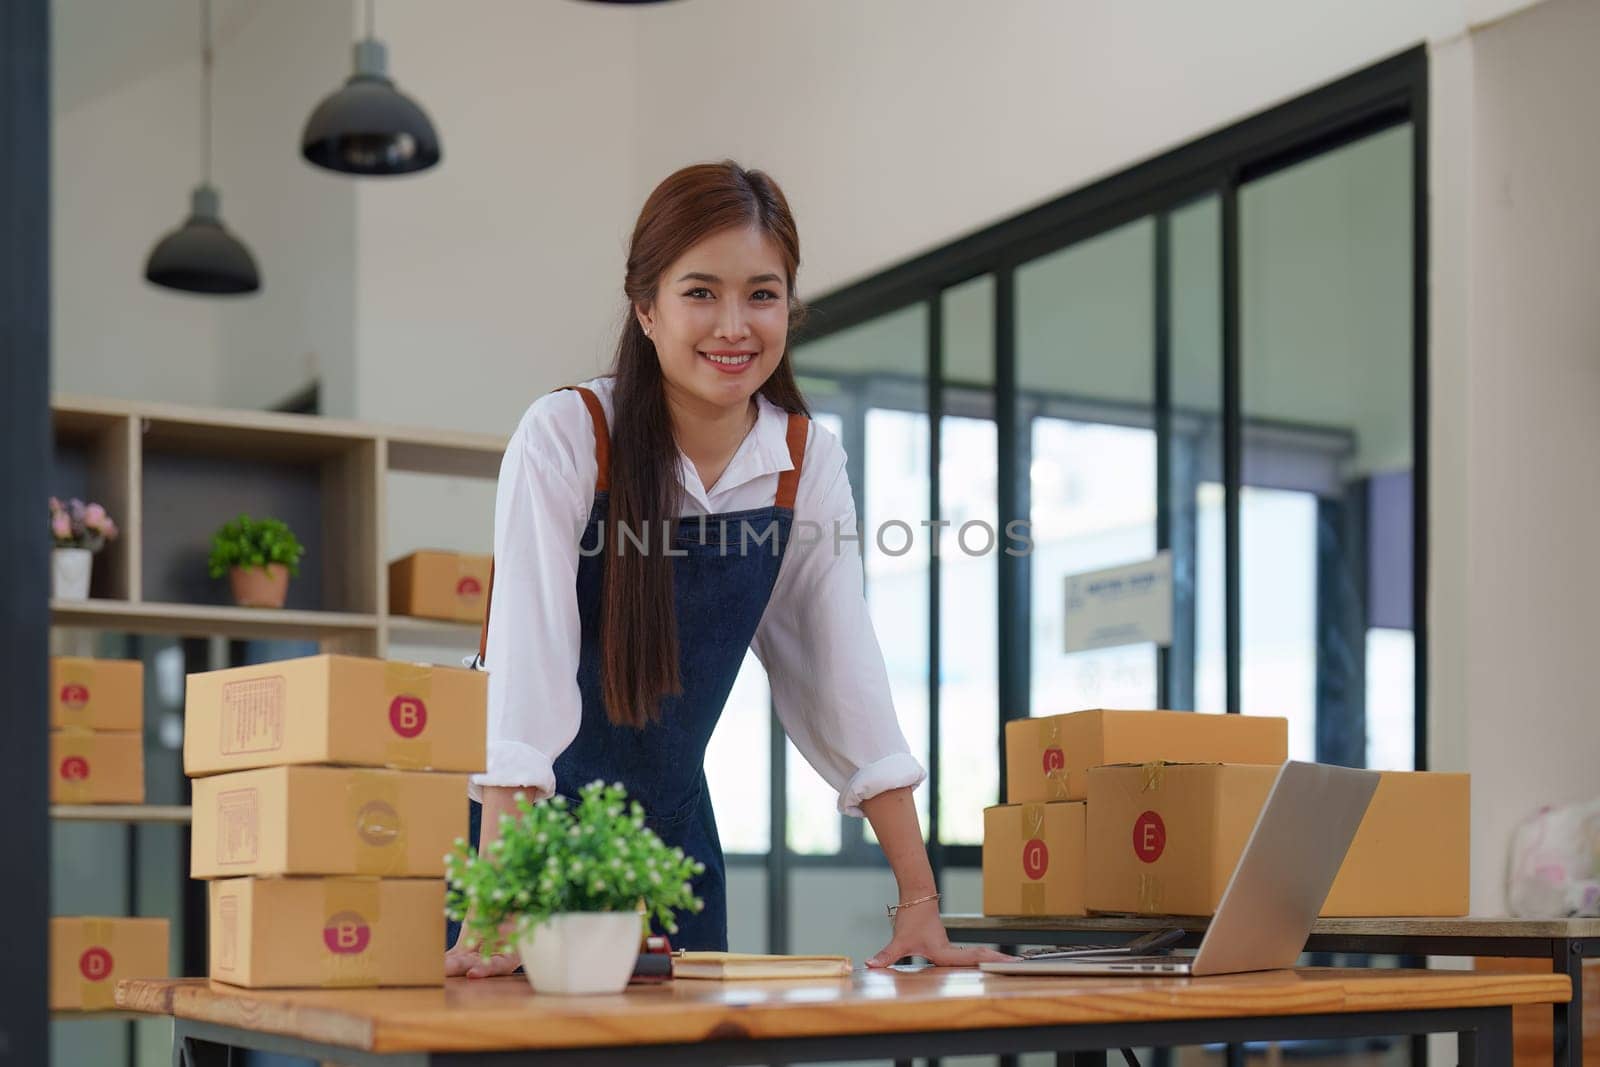 Small businesses SME owners female entrepreneurs working with parcel, e-business, marketing, online shop, sme, entrepreneurs.